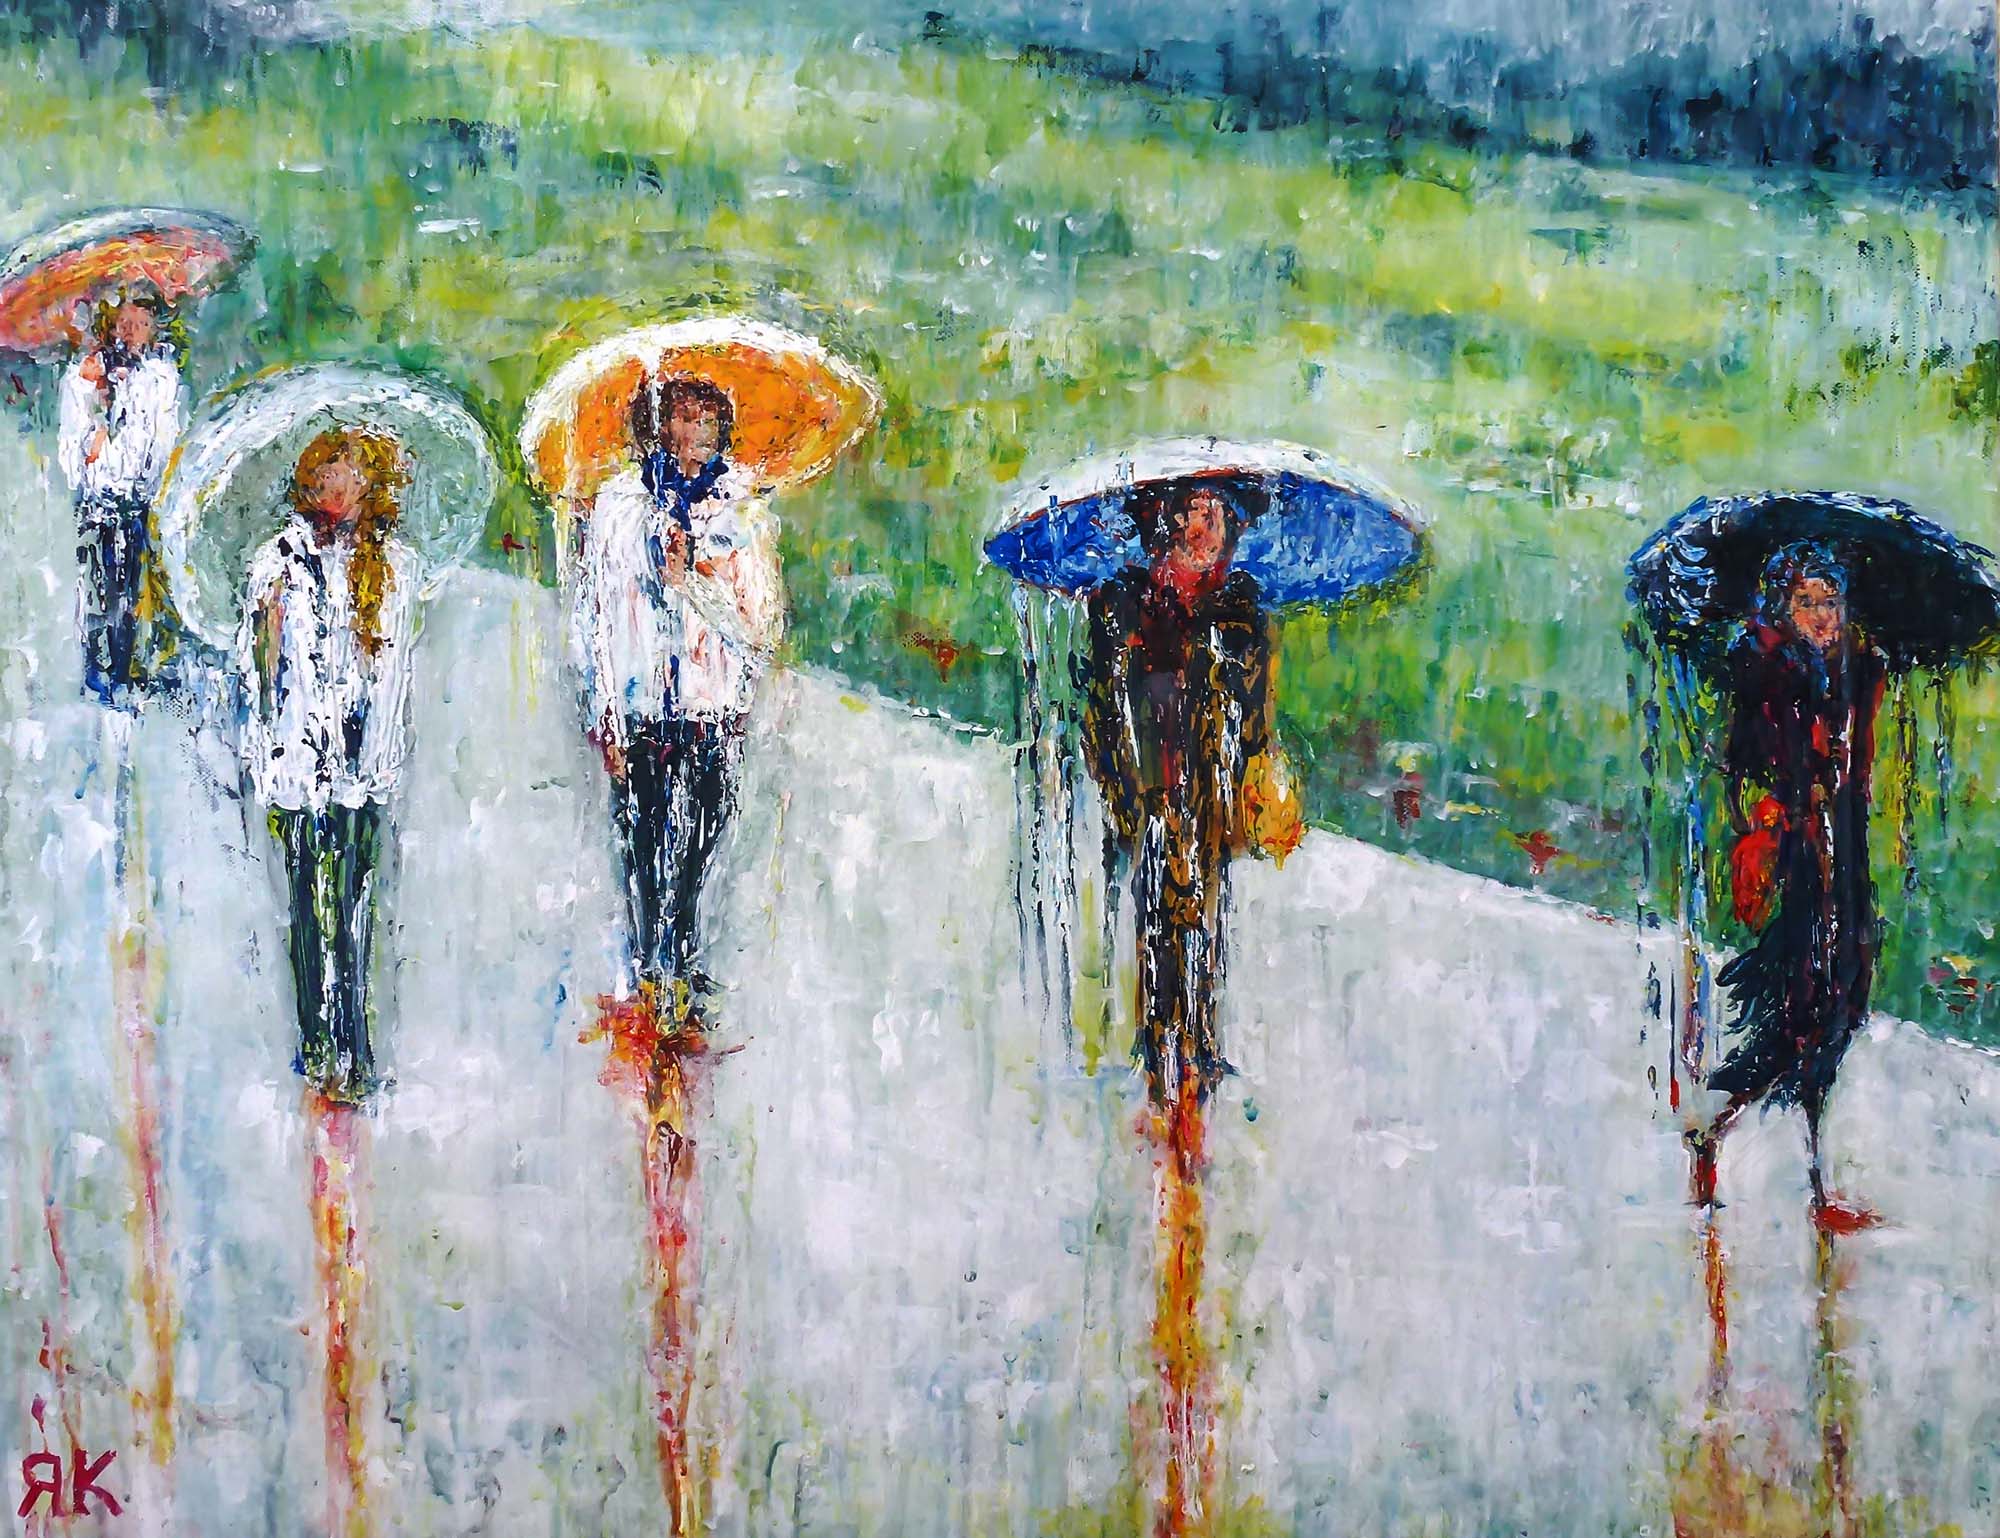 Walking people with umbrella walking through the rain in Tyrol, Austria by Ria Kieboom